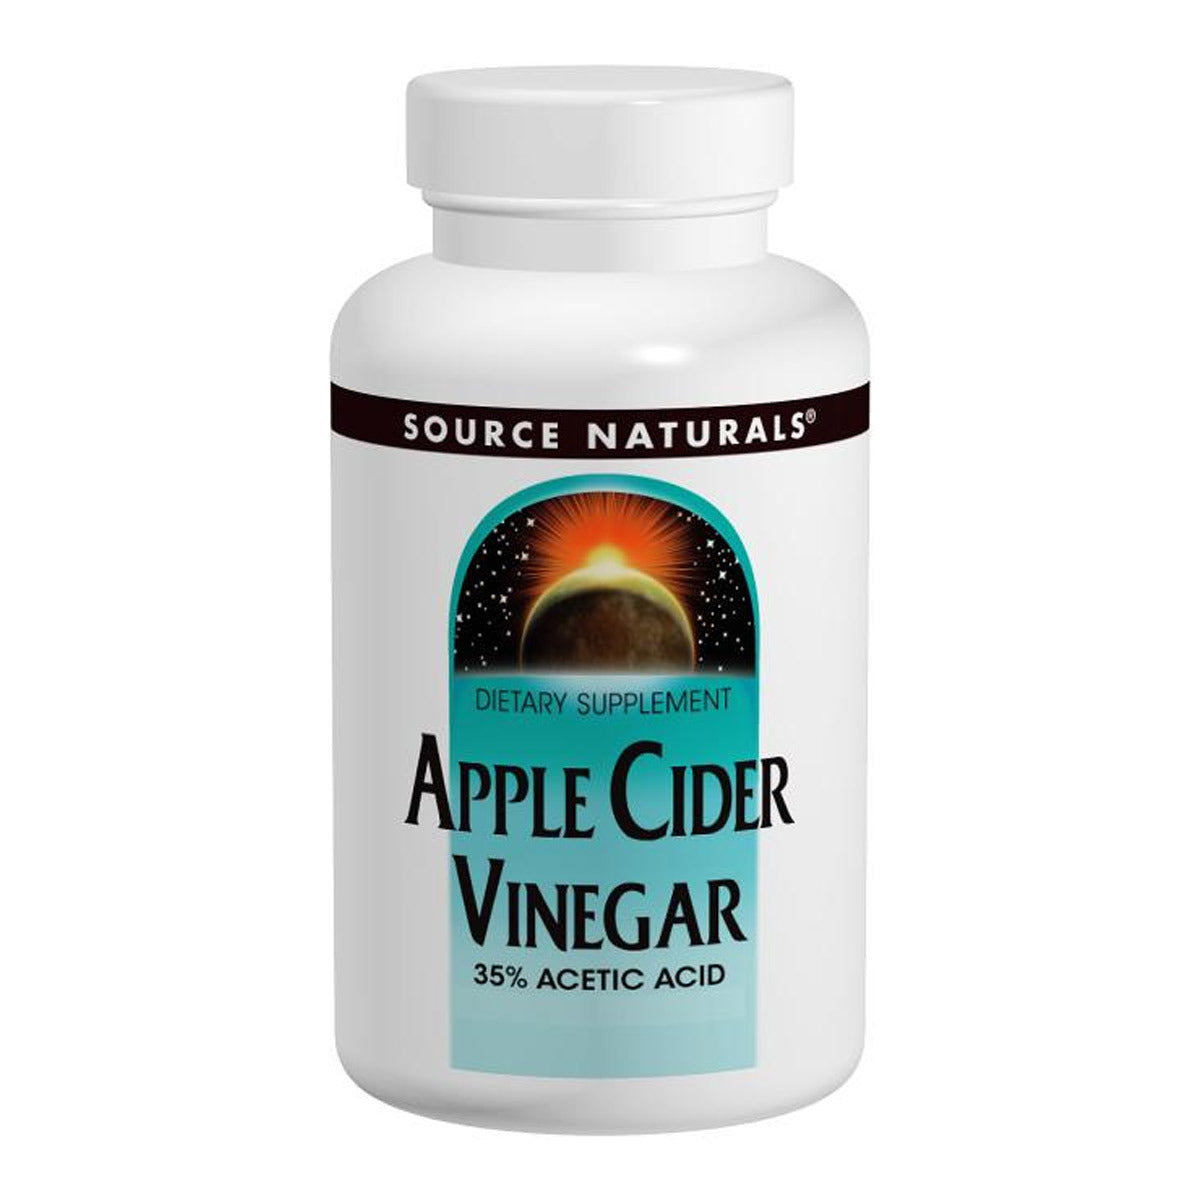 Primary image of Apple Cider Vinegar